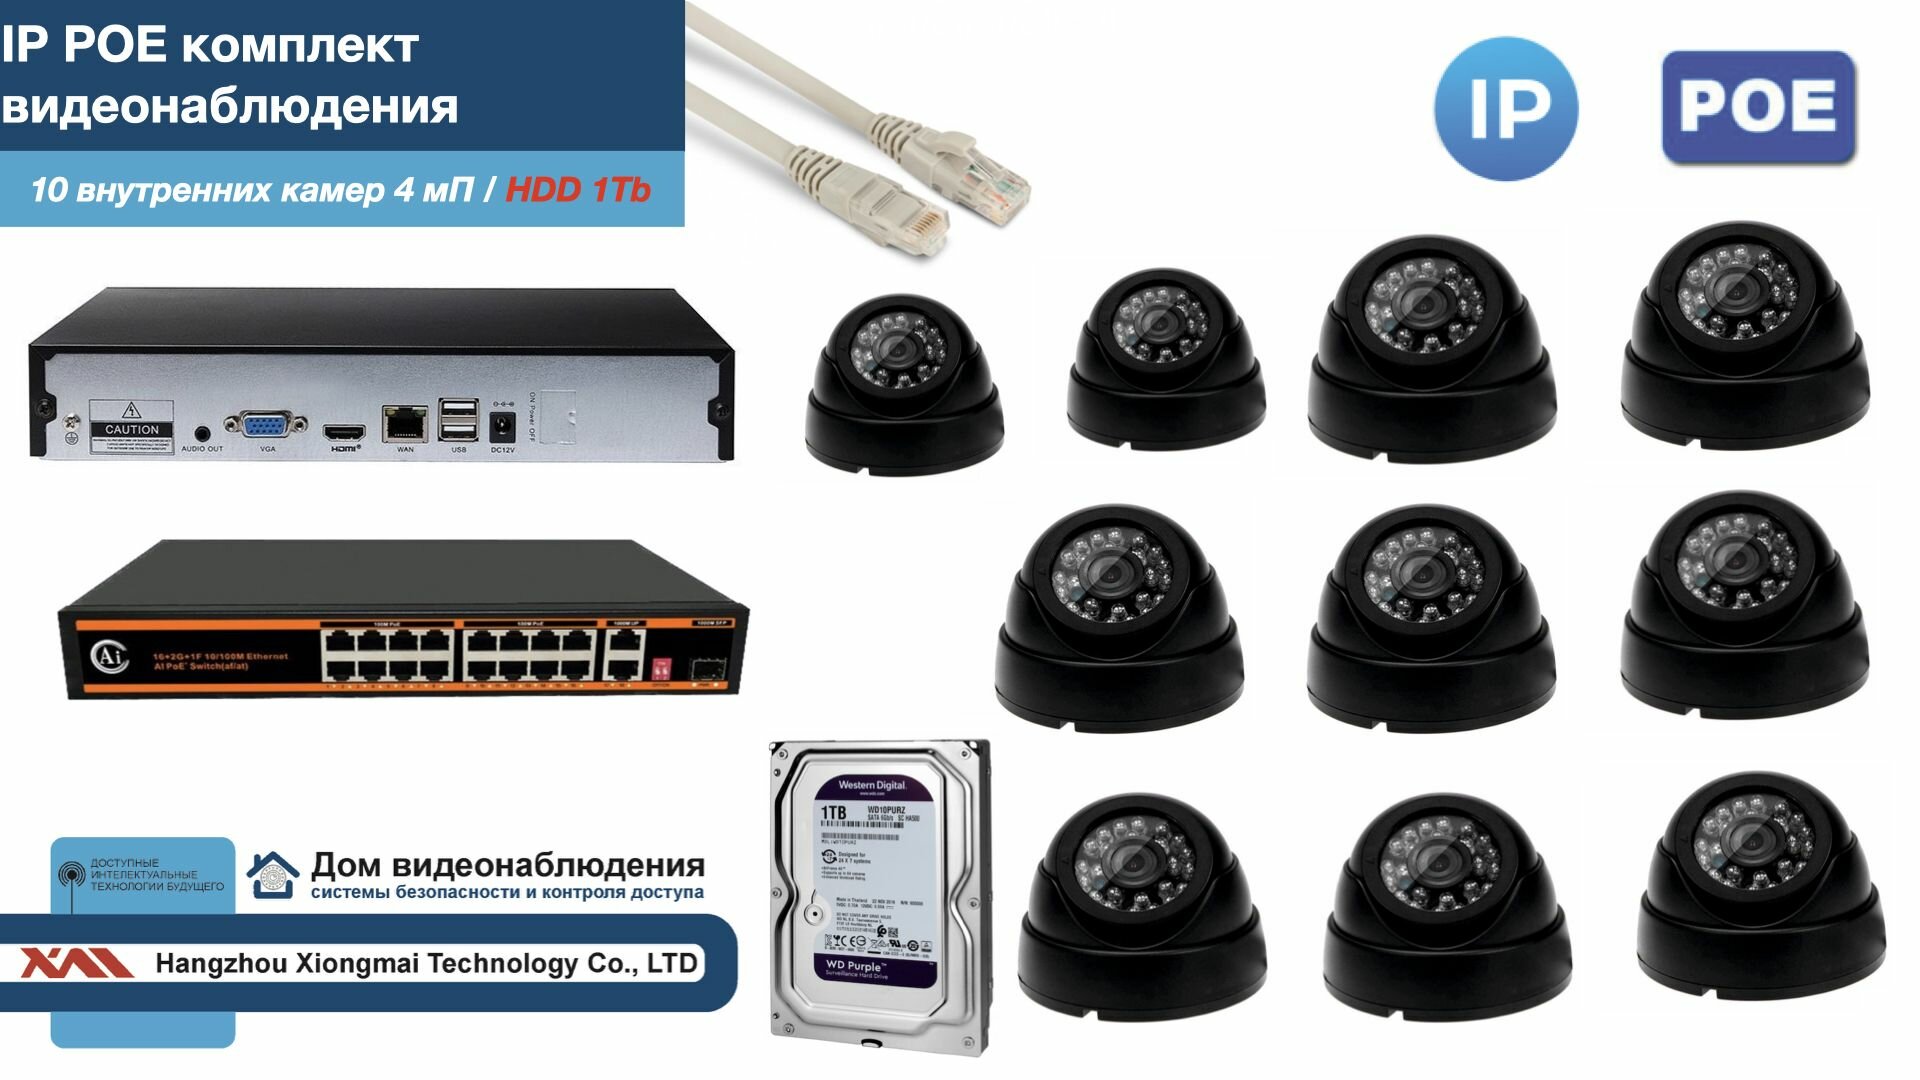 Полный IP POE комплект видеонаблюдения на 10 камер (KIT10IPPOE300B4MP-HDD1Tb)